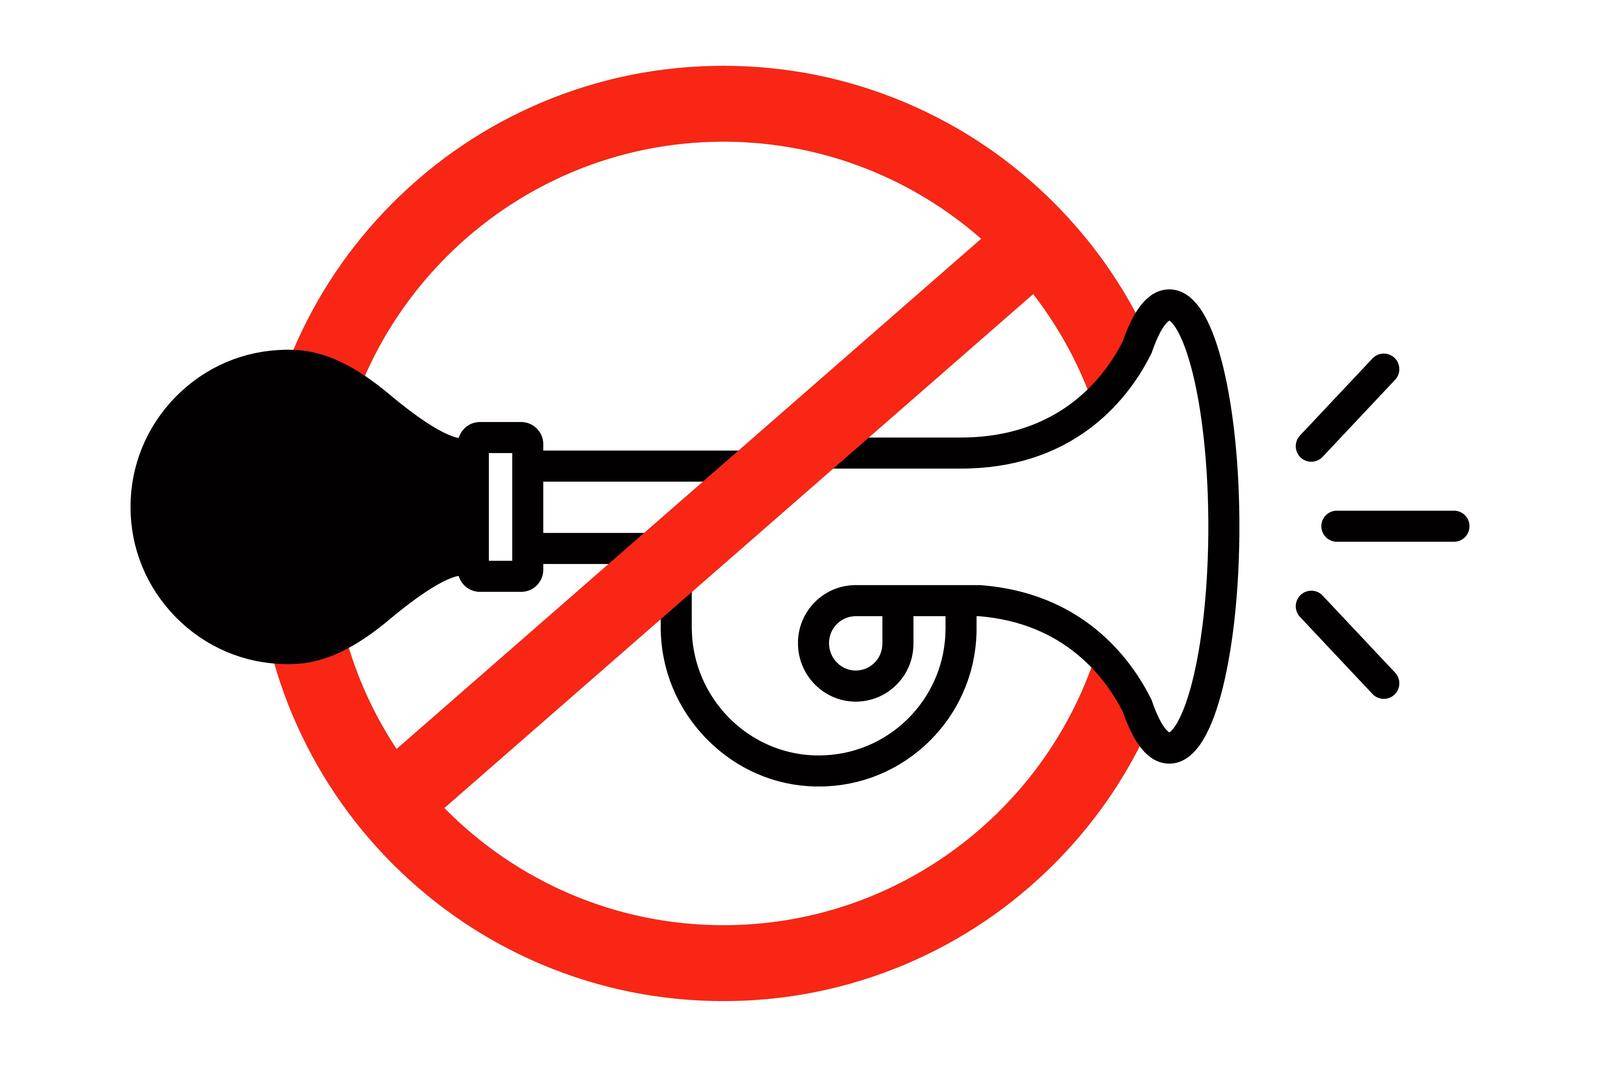 forbidden sign horn makes a loud sound. no noise sign. flat vector illustration